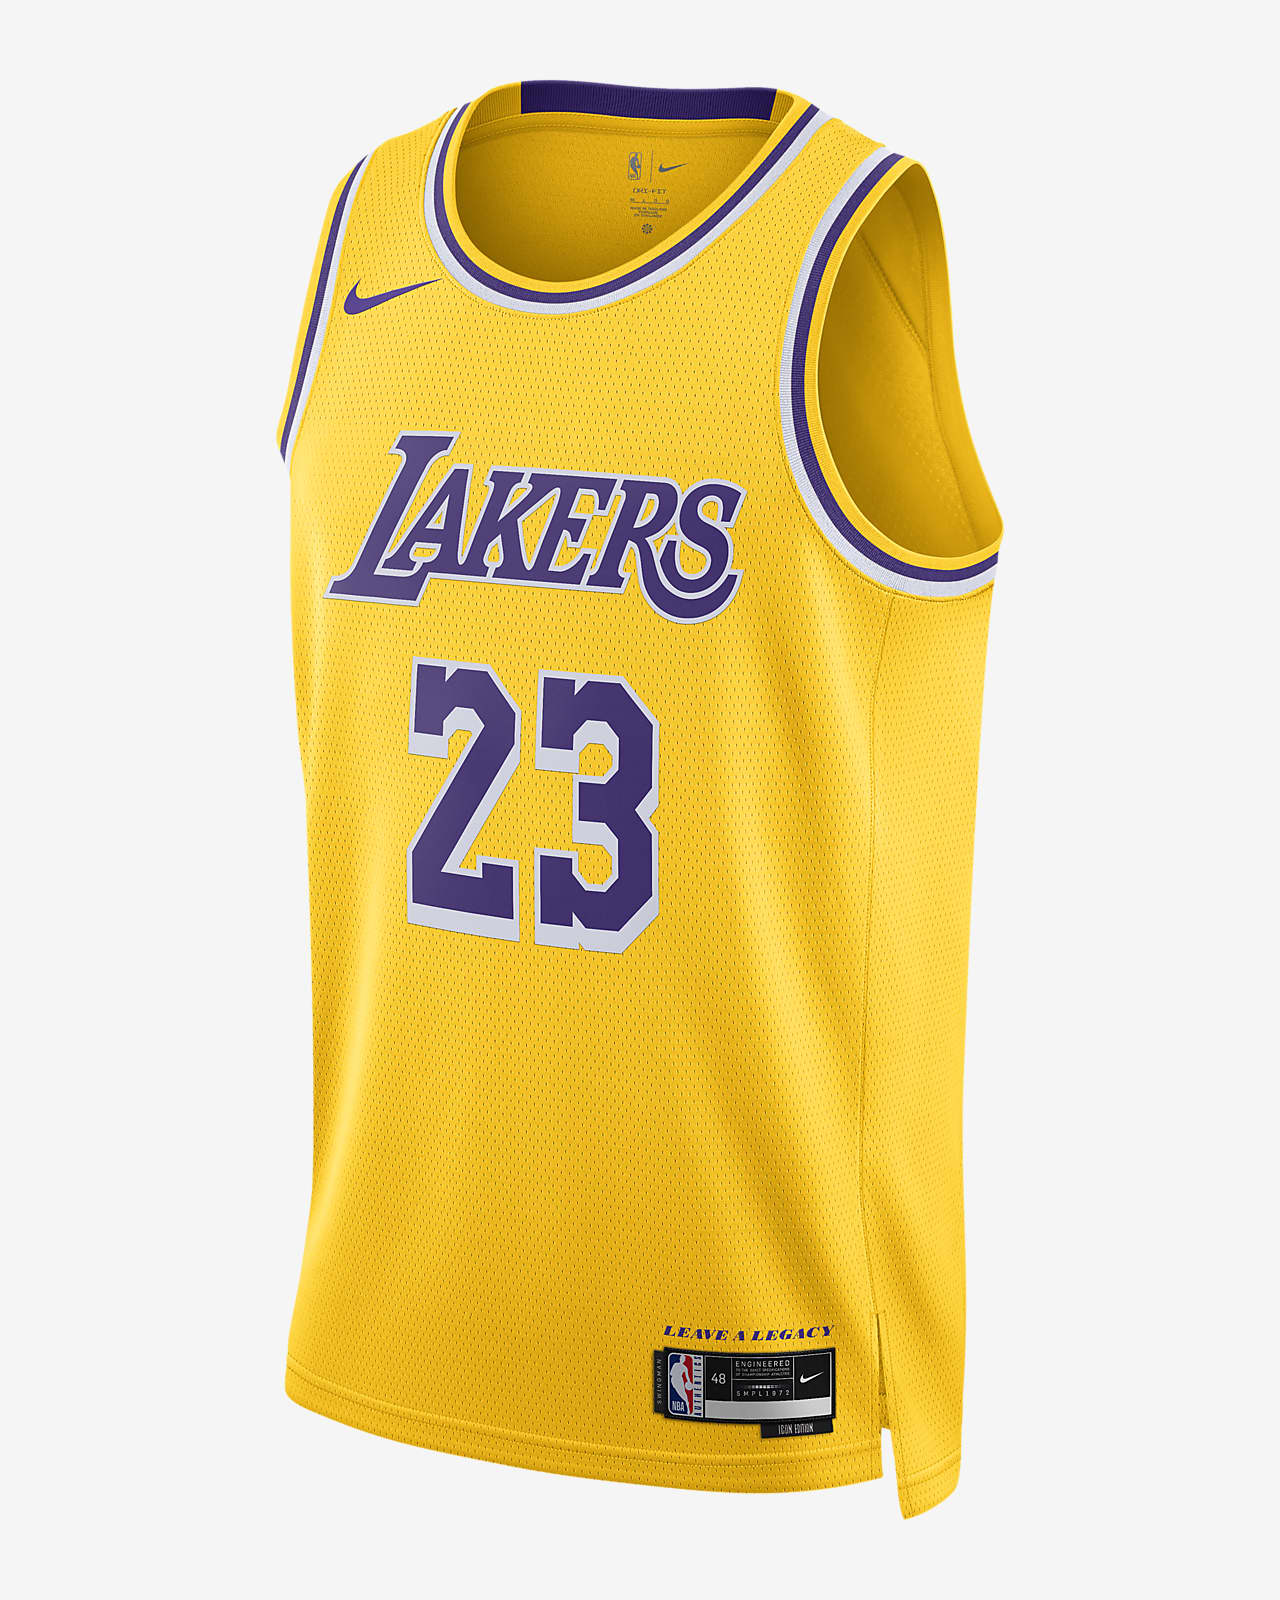 2022/23 赛季洛杉矶湖人队 Icon Edition Nike Dri-FIT NBA Swingman Jersey 男子透气速干球衣